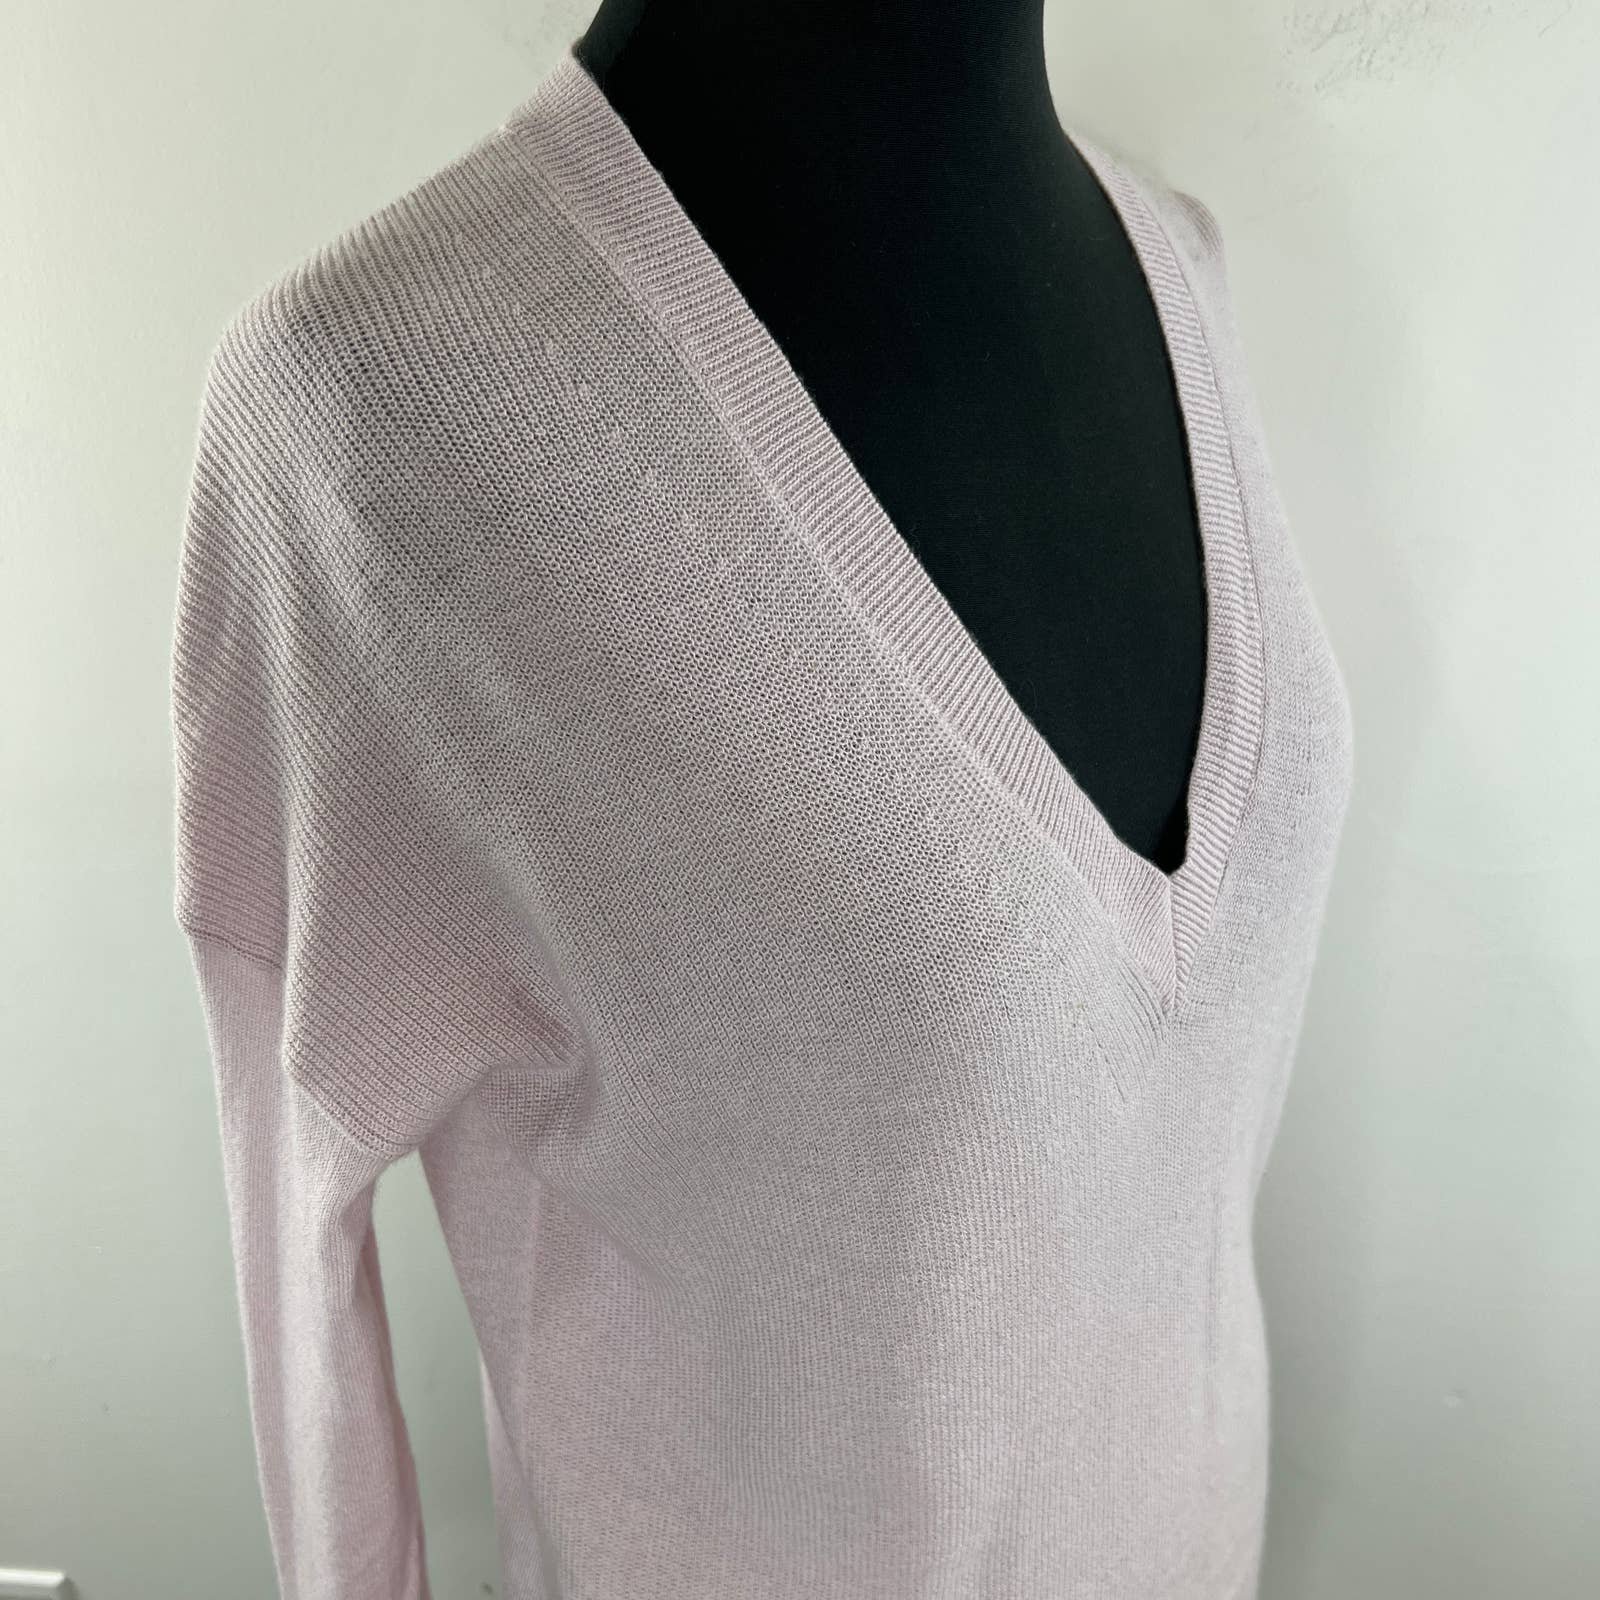 The Best Seller J Crew Light Pink Merino Wool Cotton Lightweight V-Neck Sweater Long Sleeve XS GIk8a8GgS US Sale